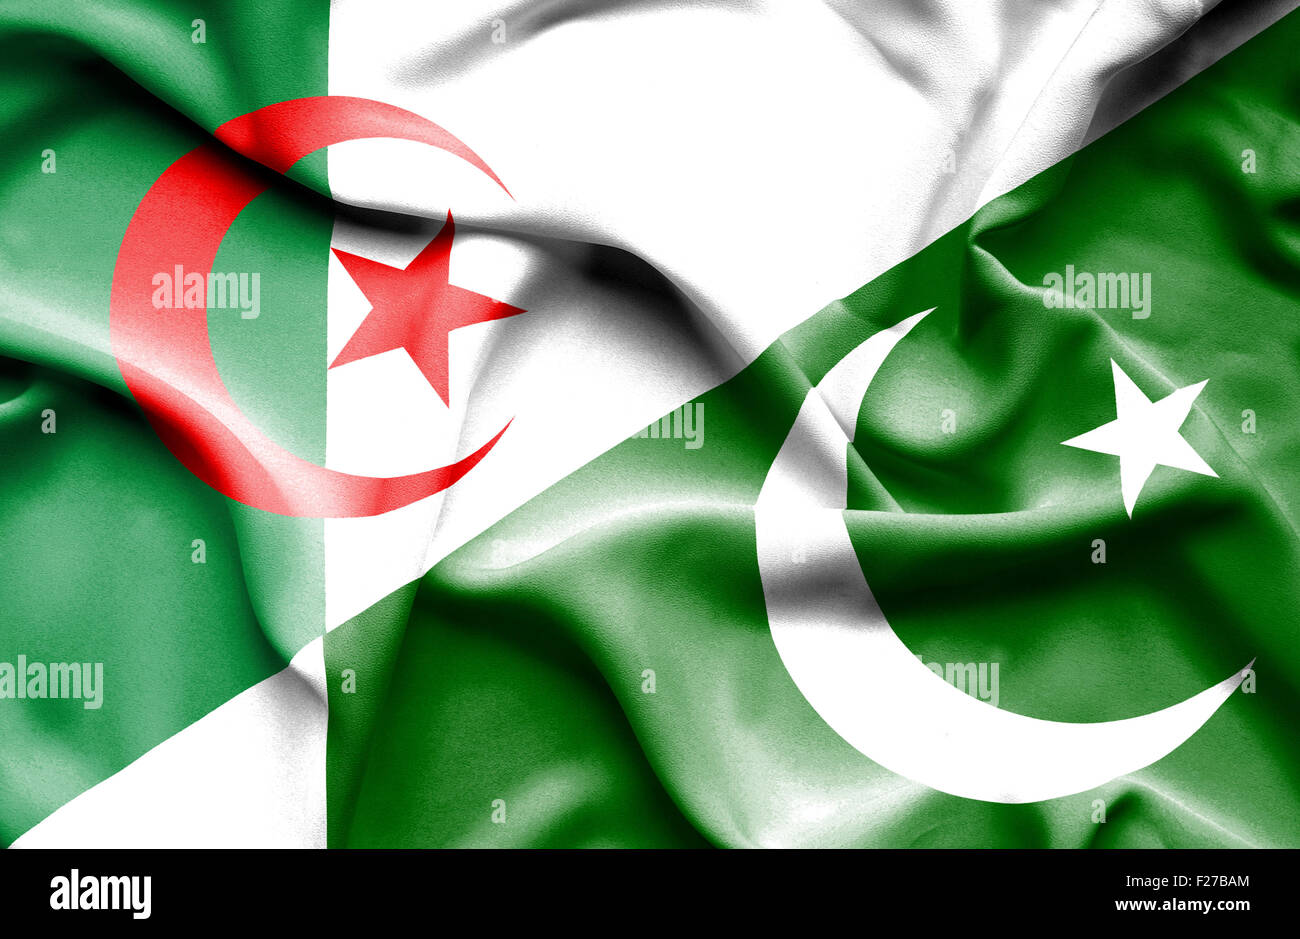 Waving flag of Pakistan and Algeria Stock Photo